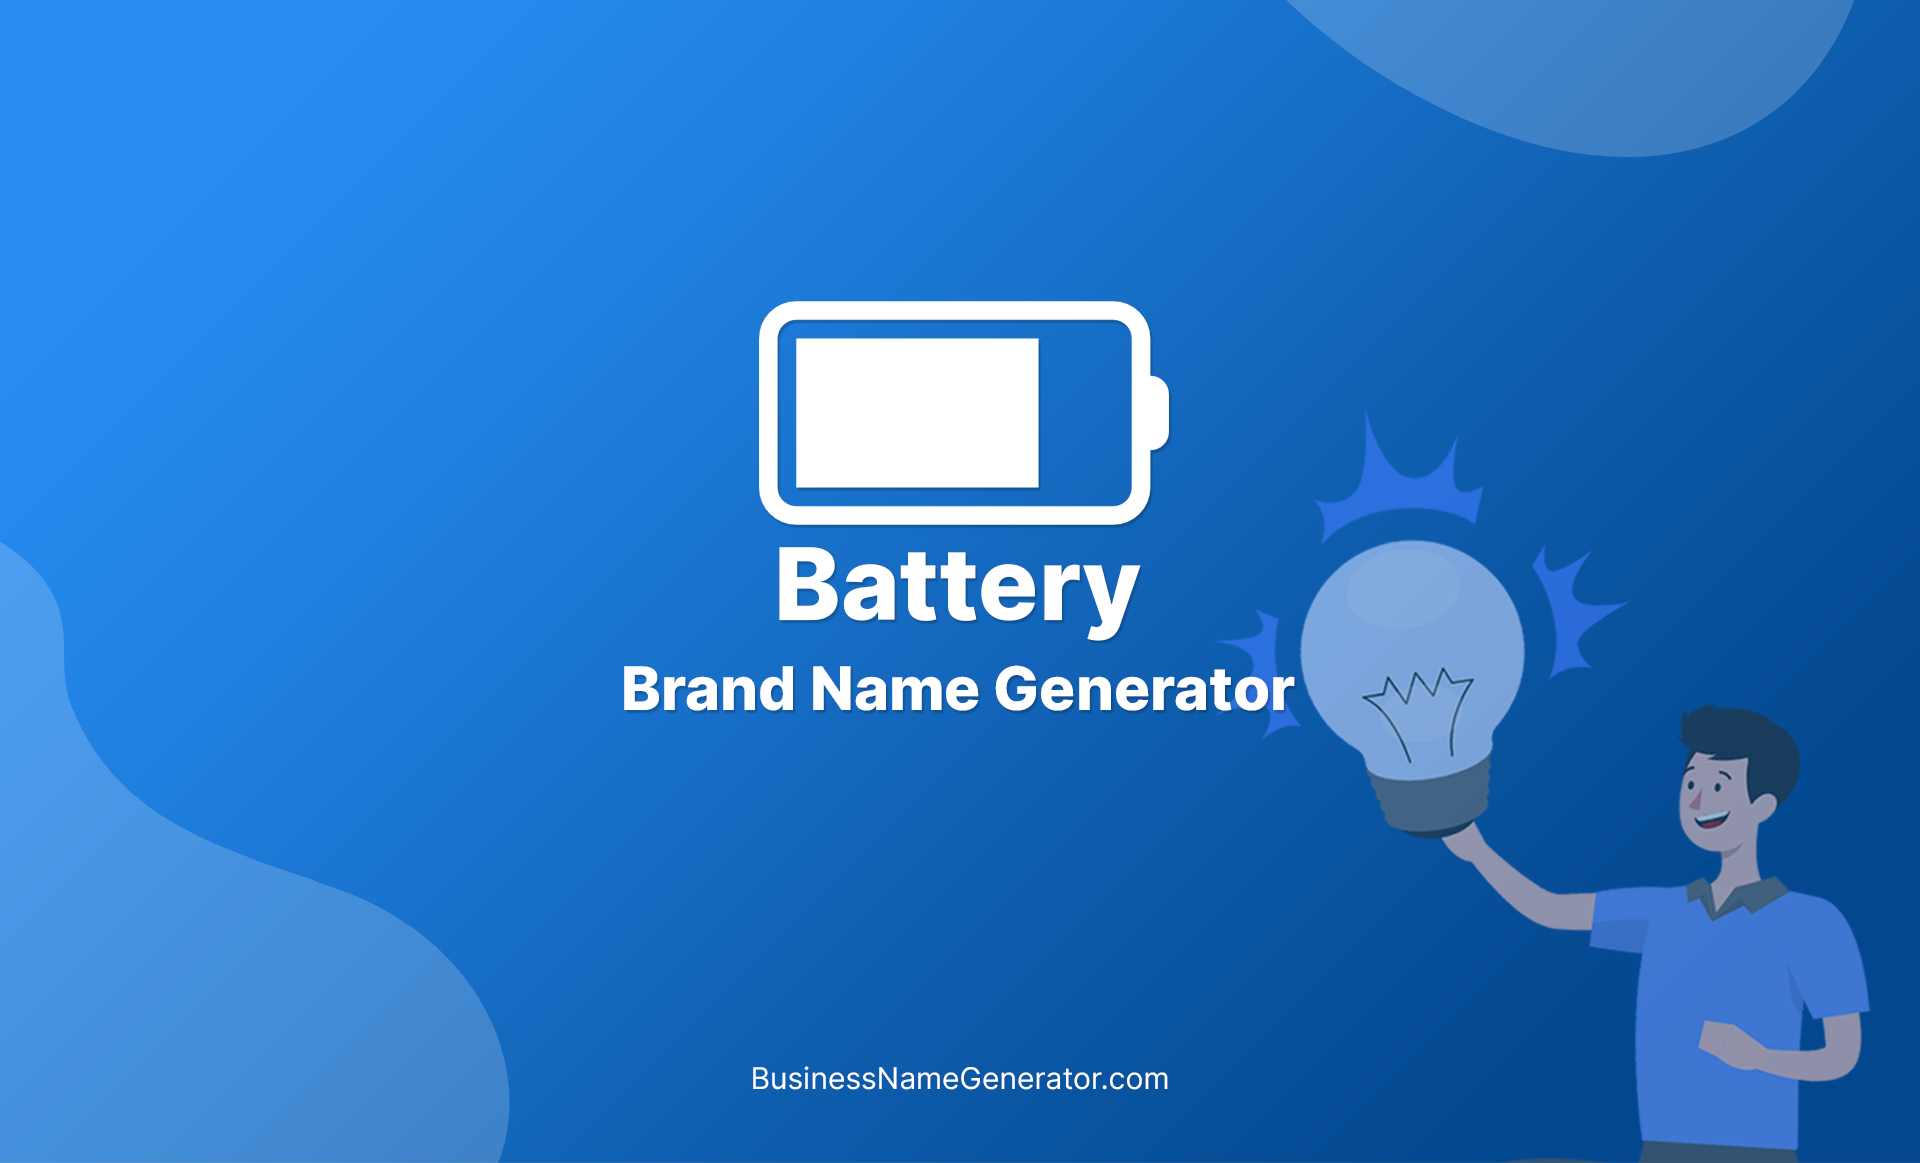 Battery Brand Name Generator